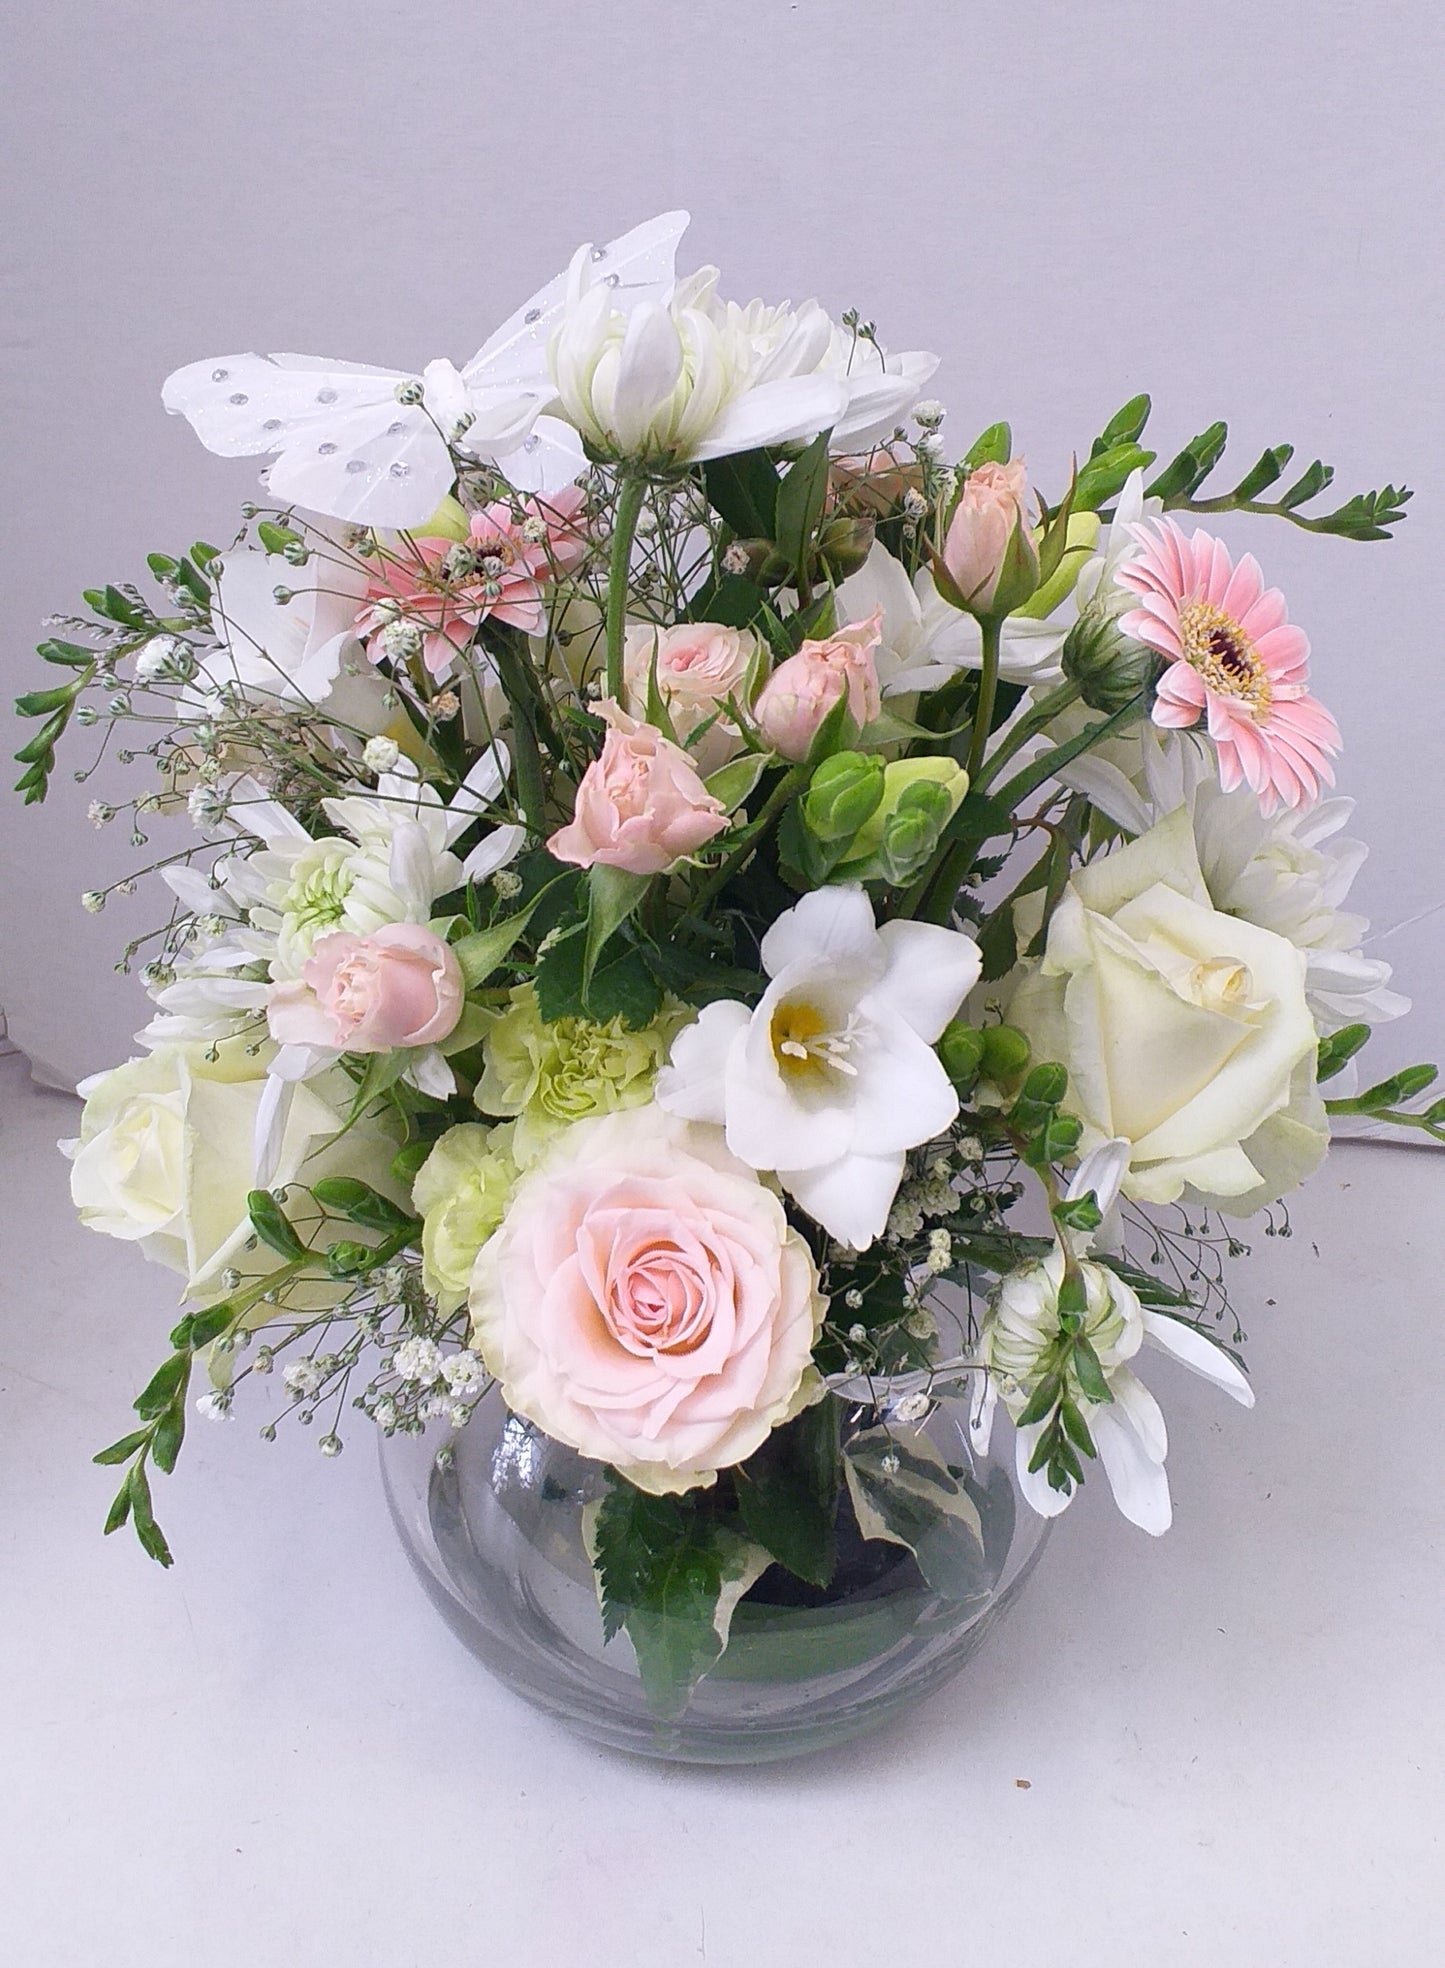 Pretty in Pink Posy Box, Flowers, roses, gerberas, freesias, carnations, chrysthemums, pink, white, cream, green, butterflies- Broadfield Flowers Florist Lincoln